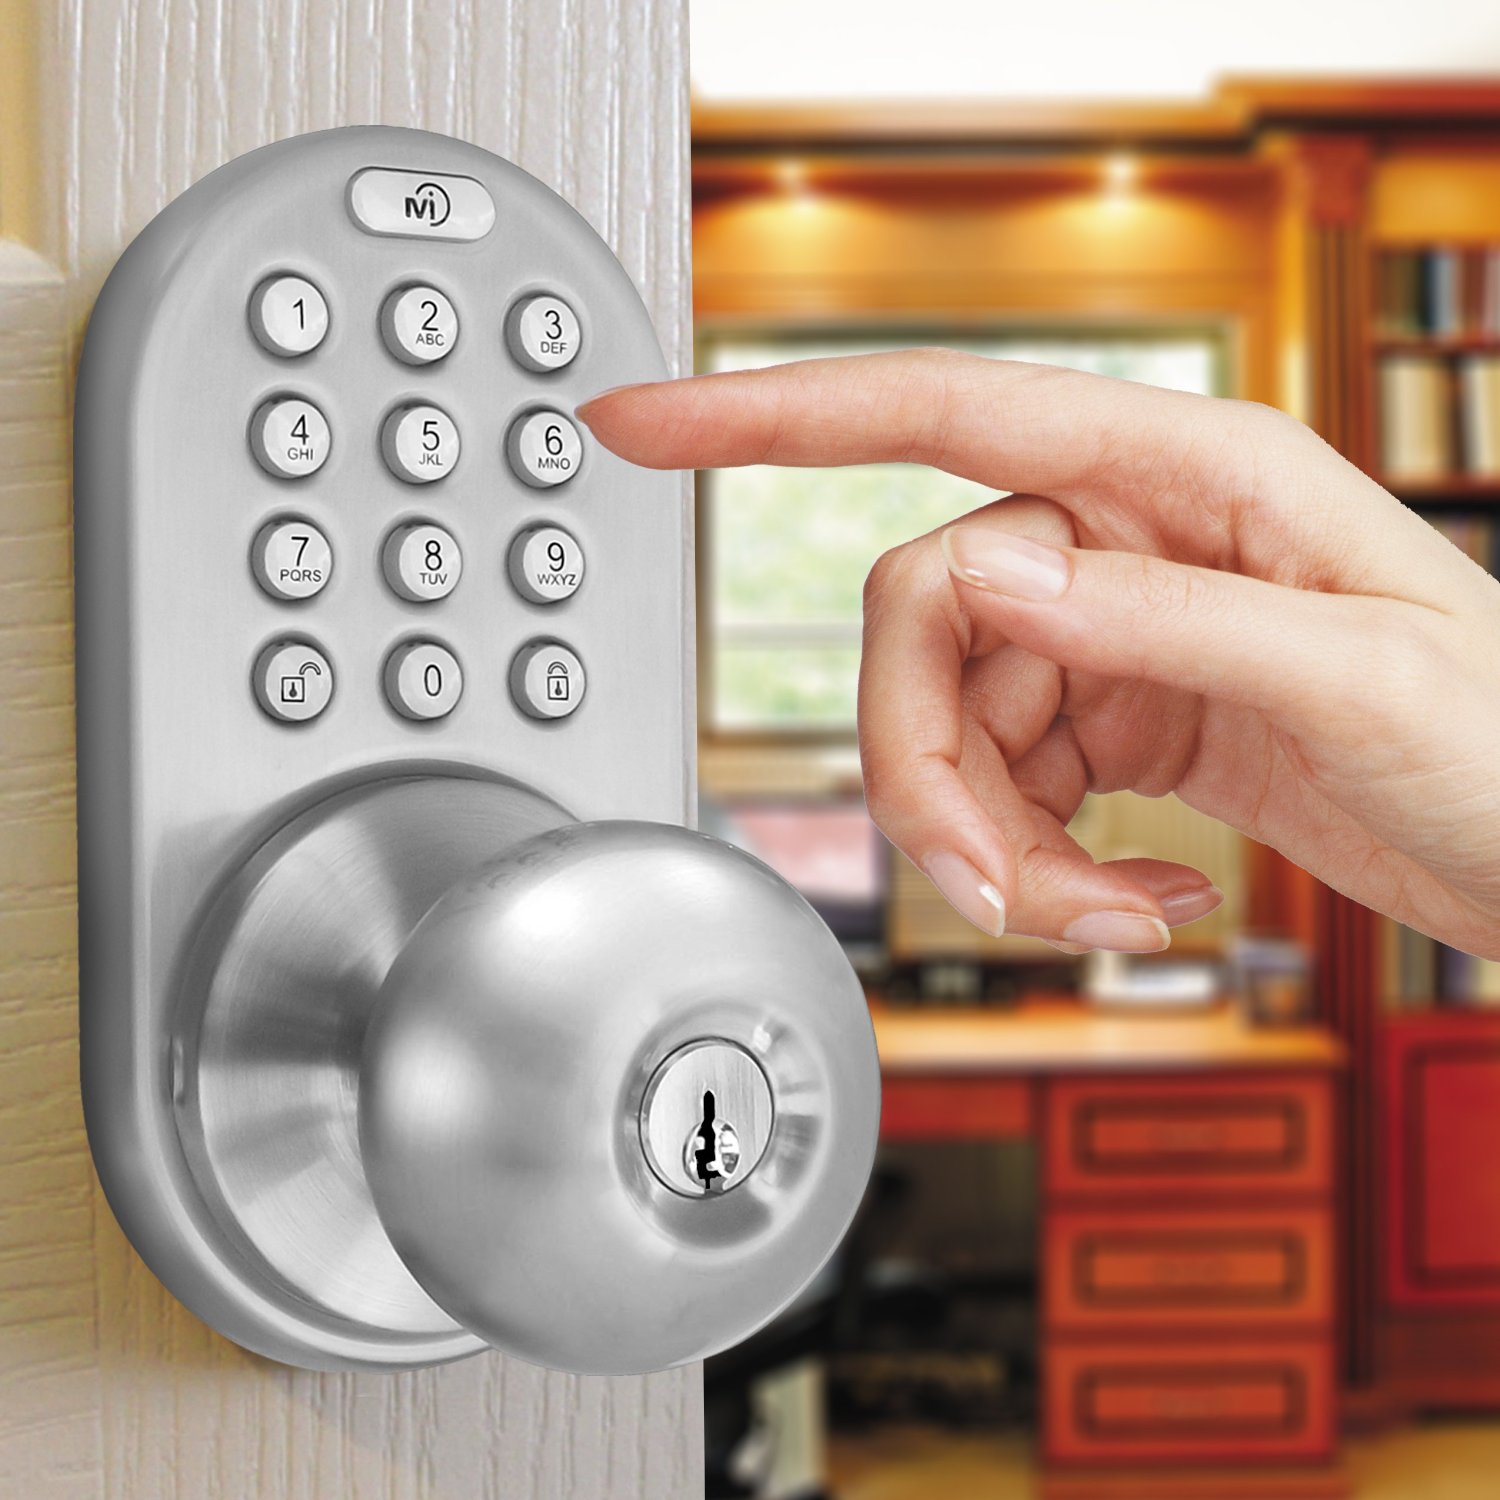 Save 50% on the MiLocks electronic touchpad entry keyless door lock